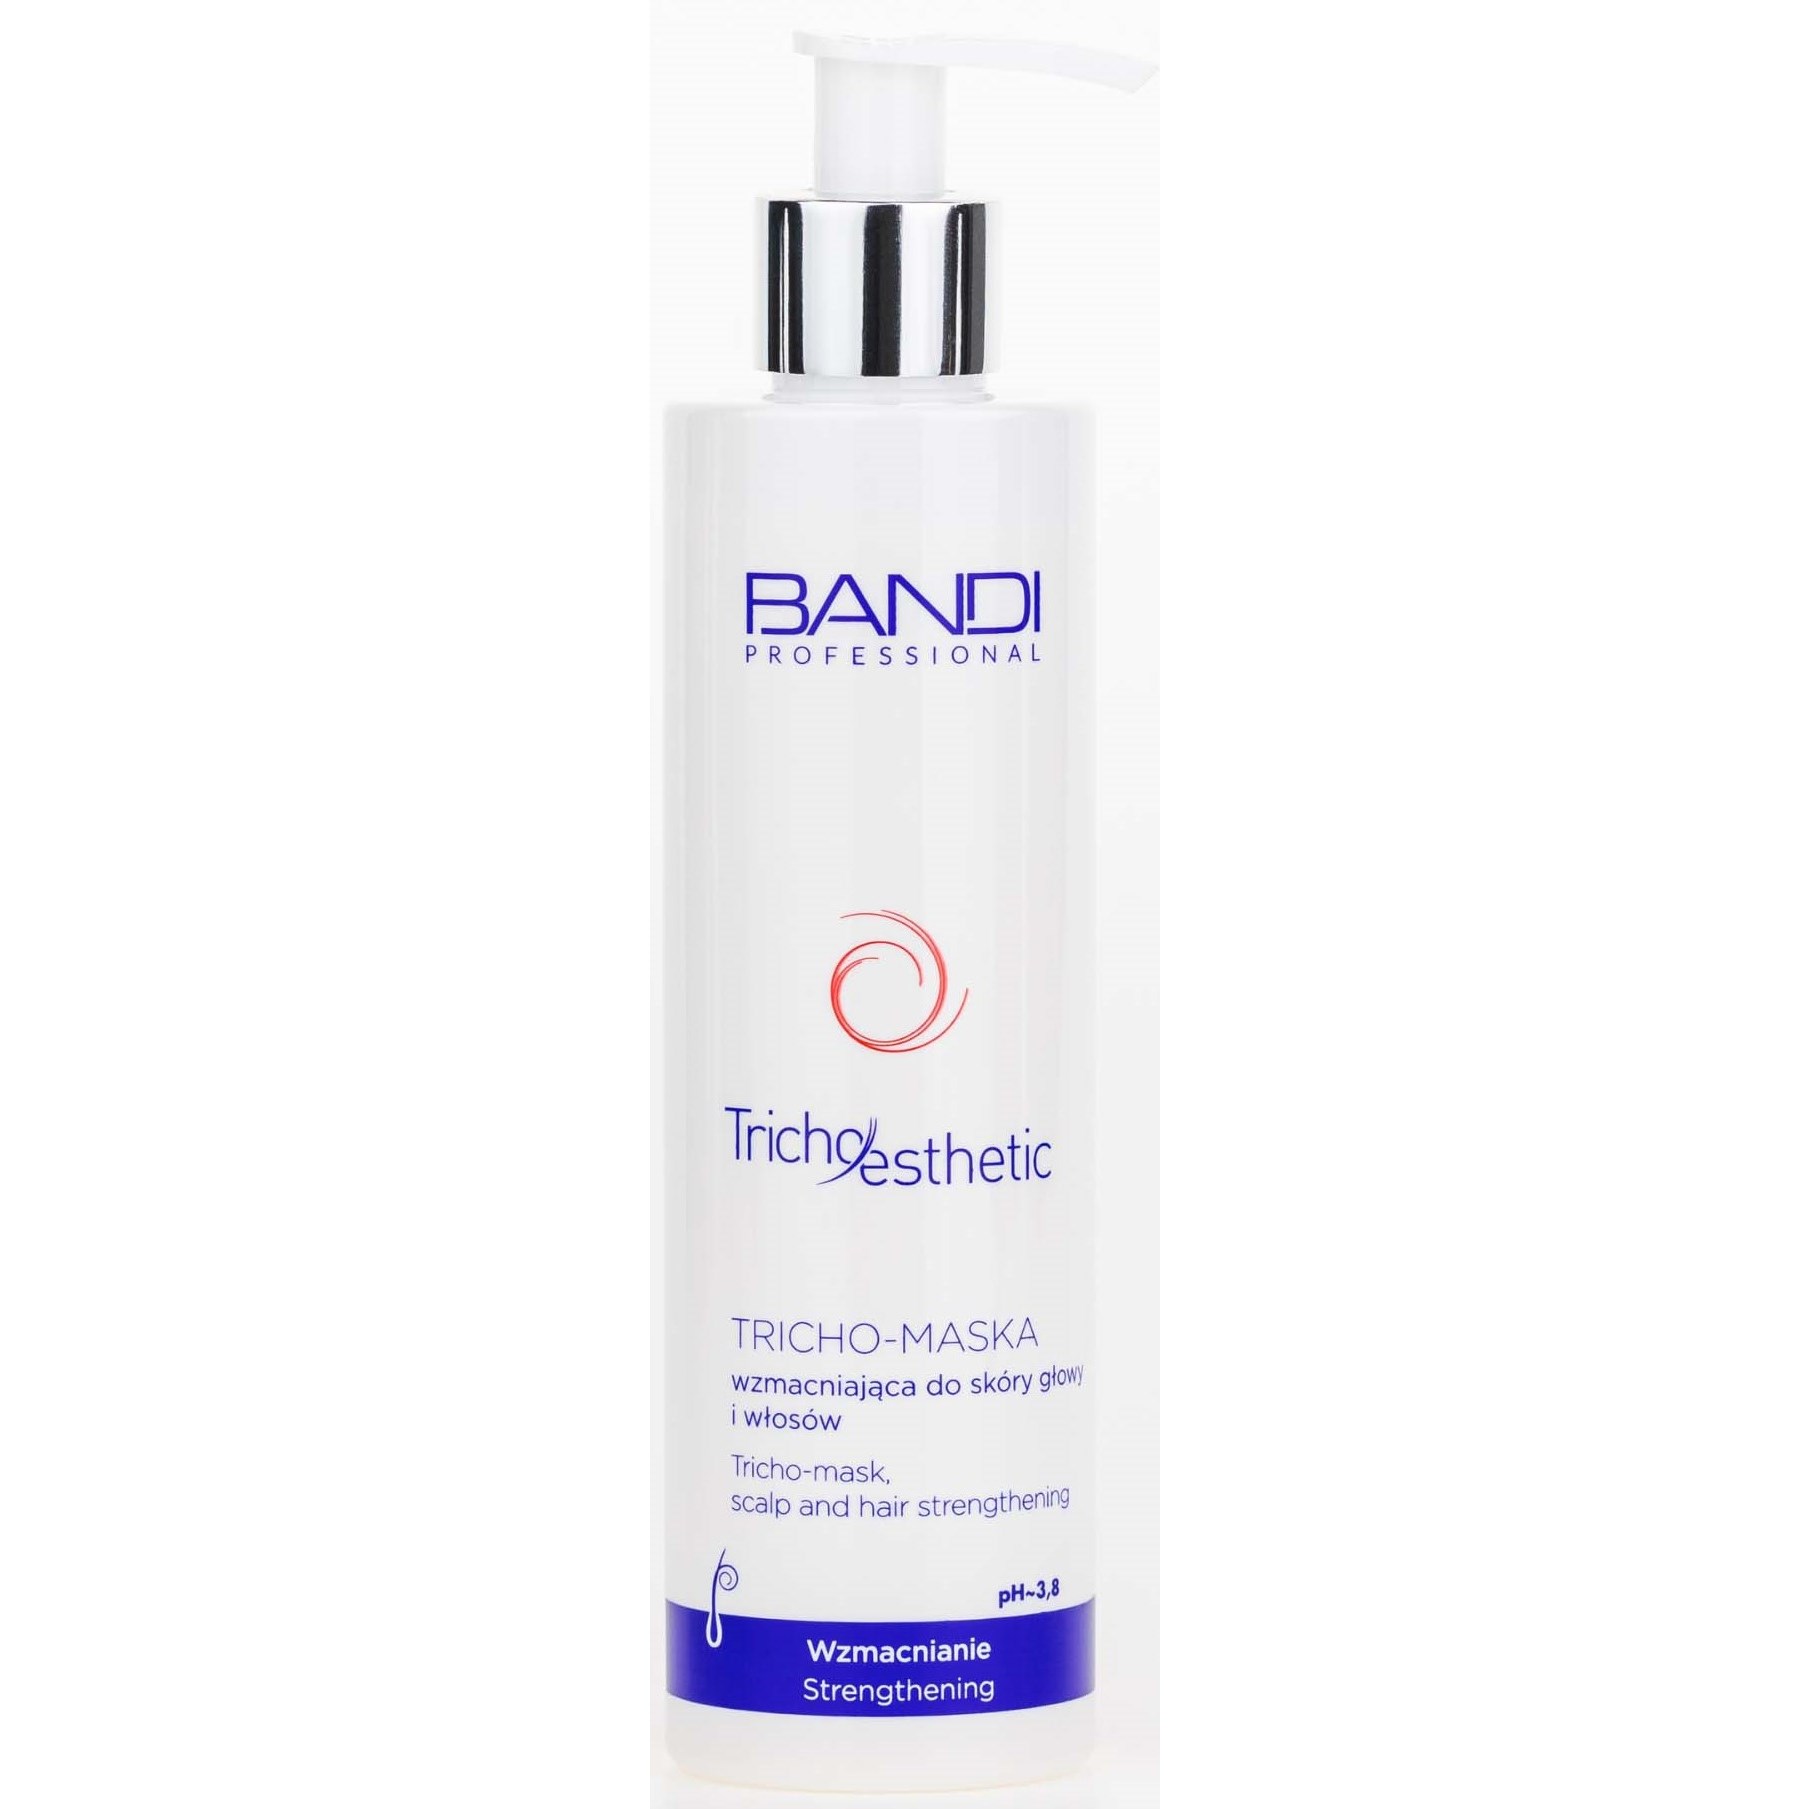 Bandi Tricho-esthetic Tricho-mask scalp and hair strengthening 23